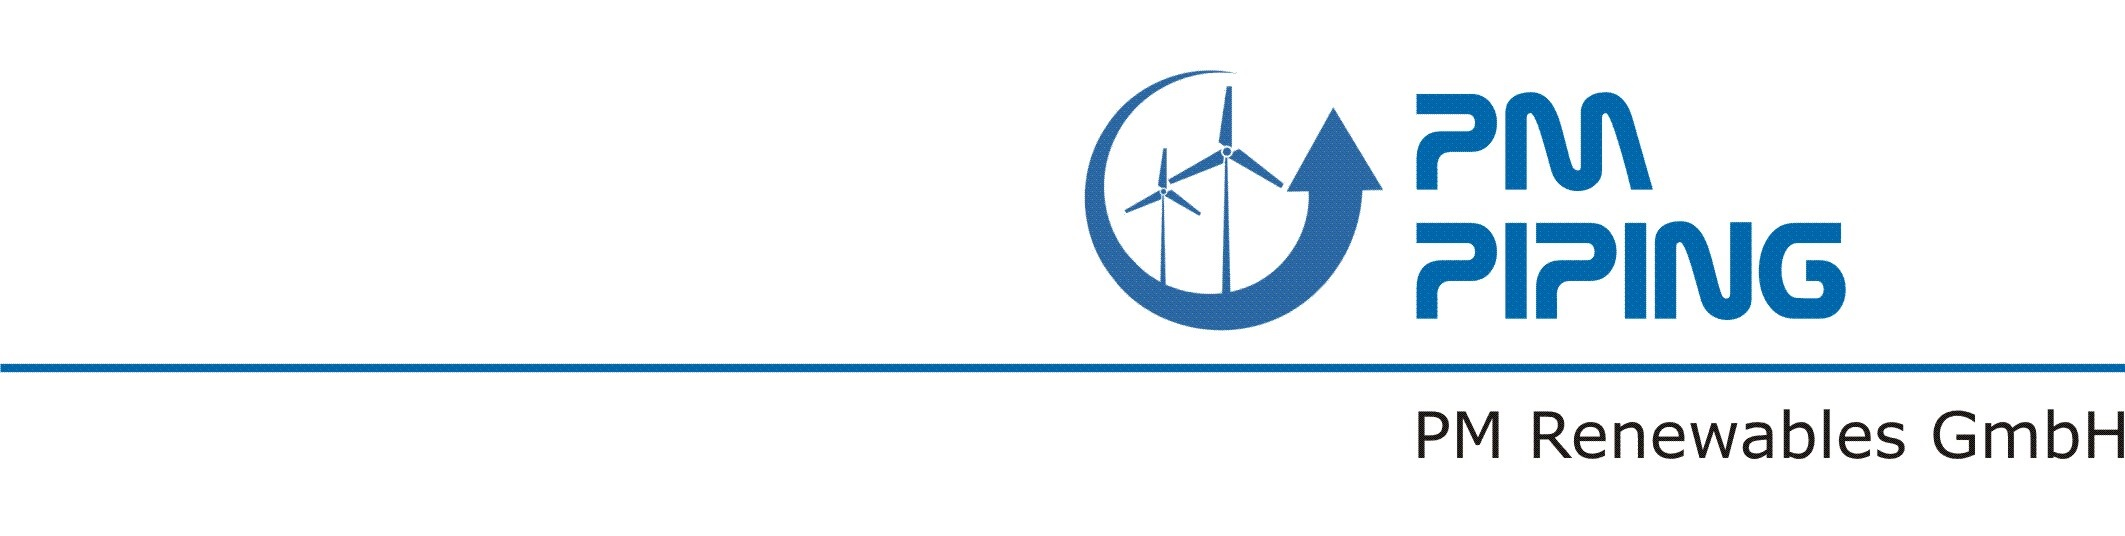 PM Renewables GmbH